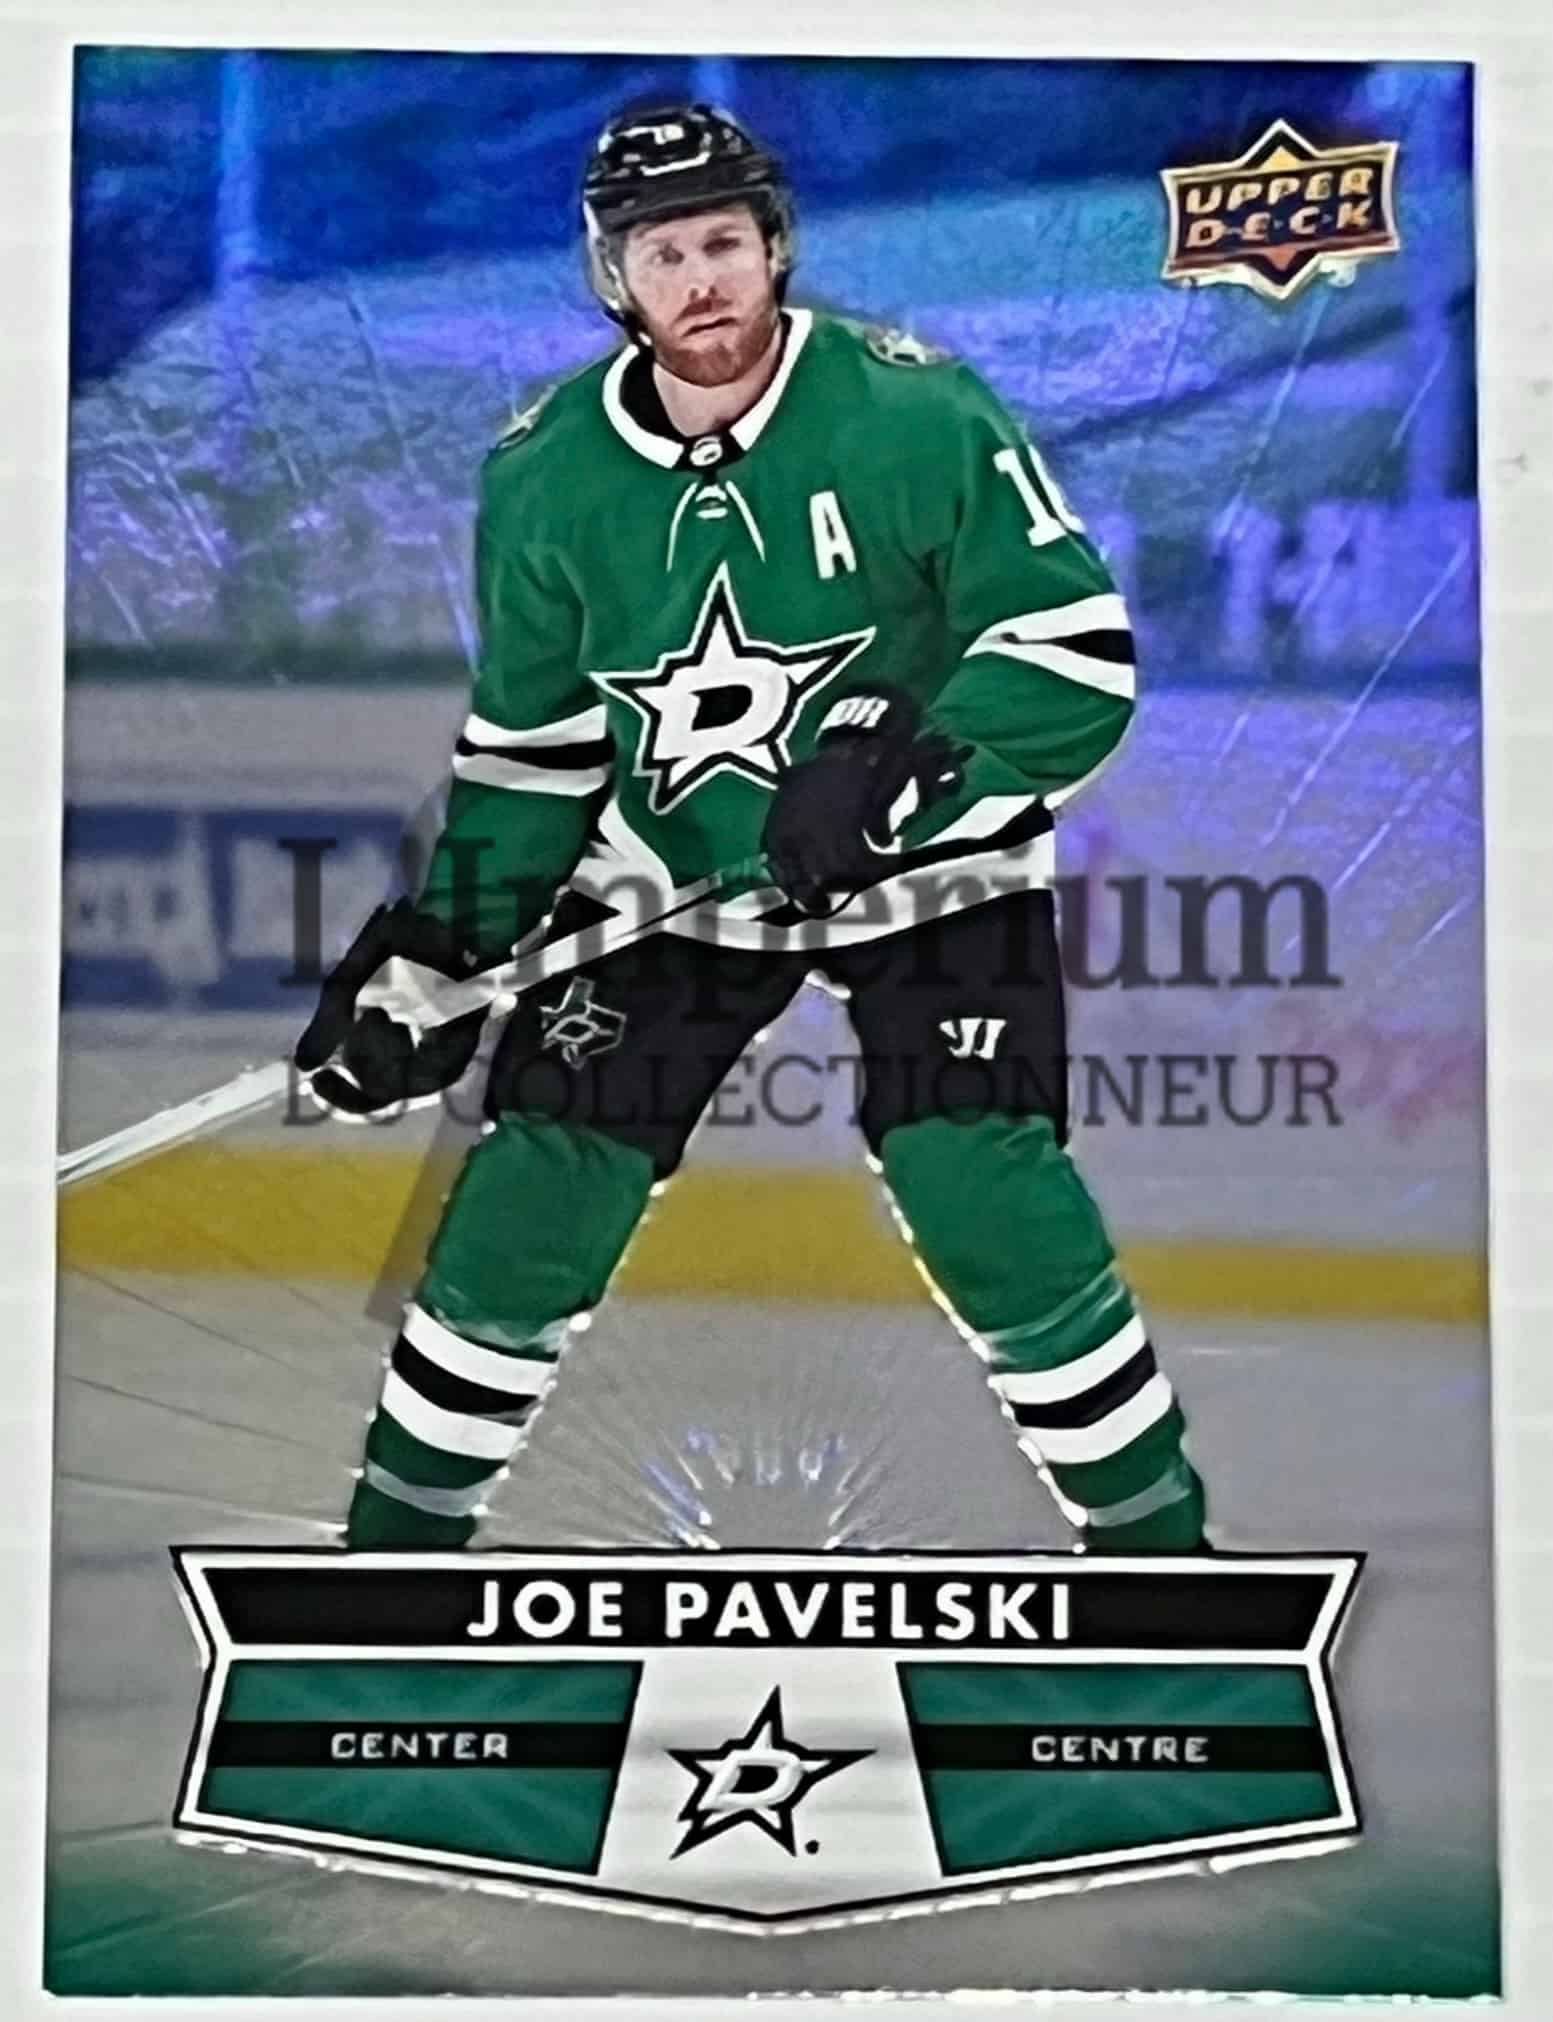 Joe Pavelski #16 - SummerSkates